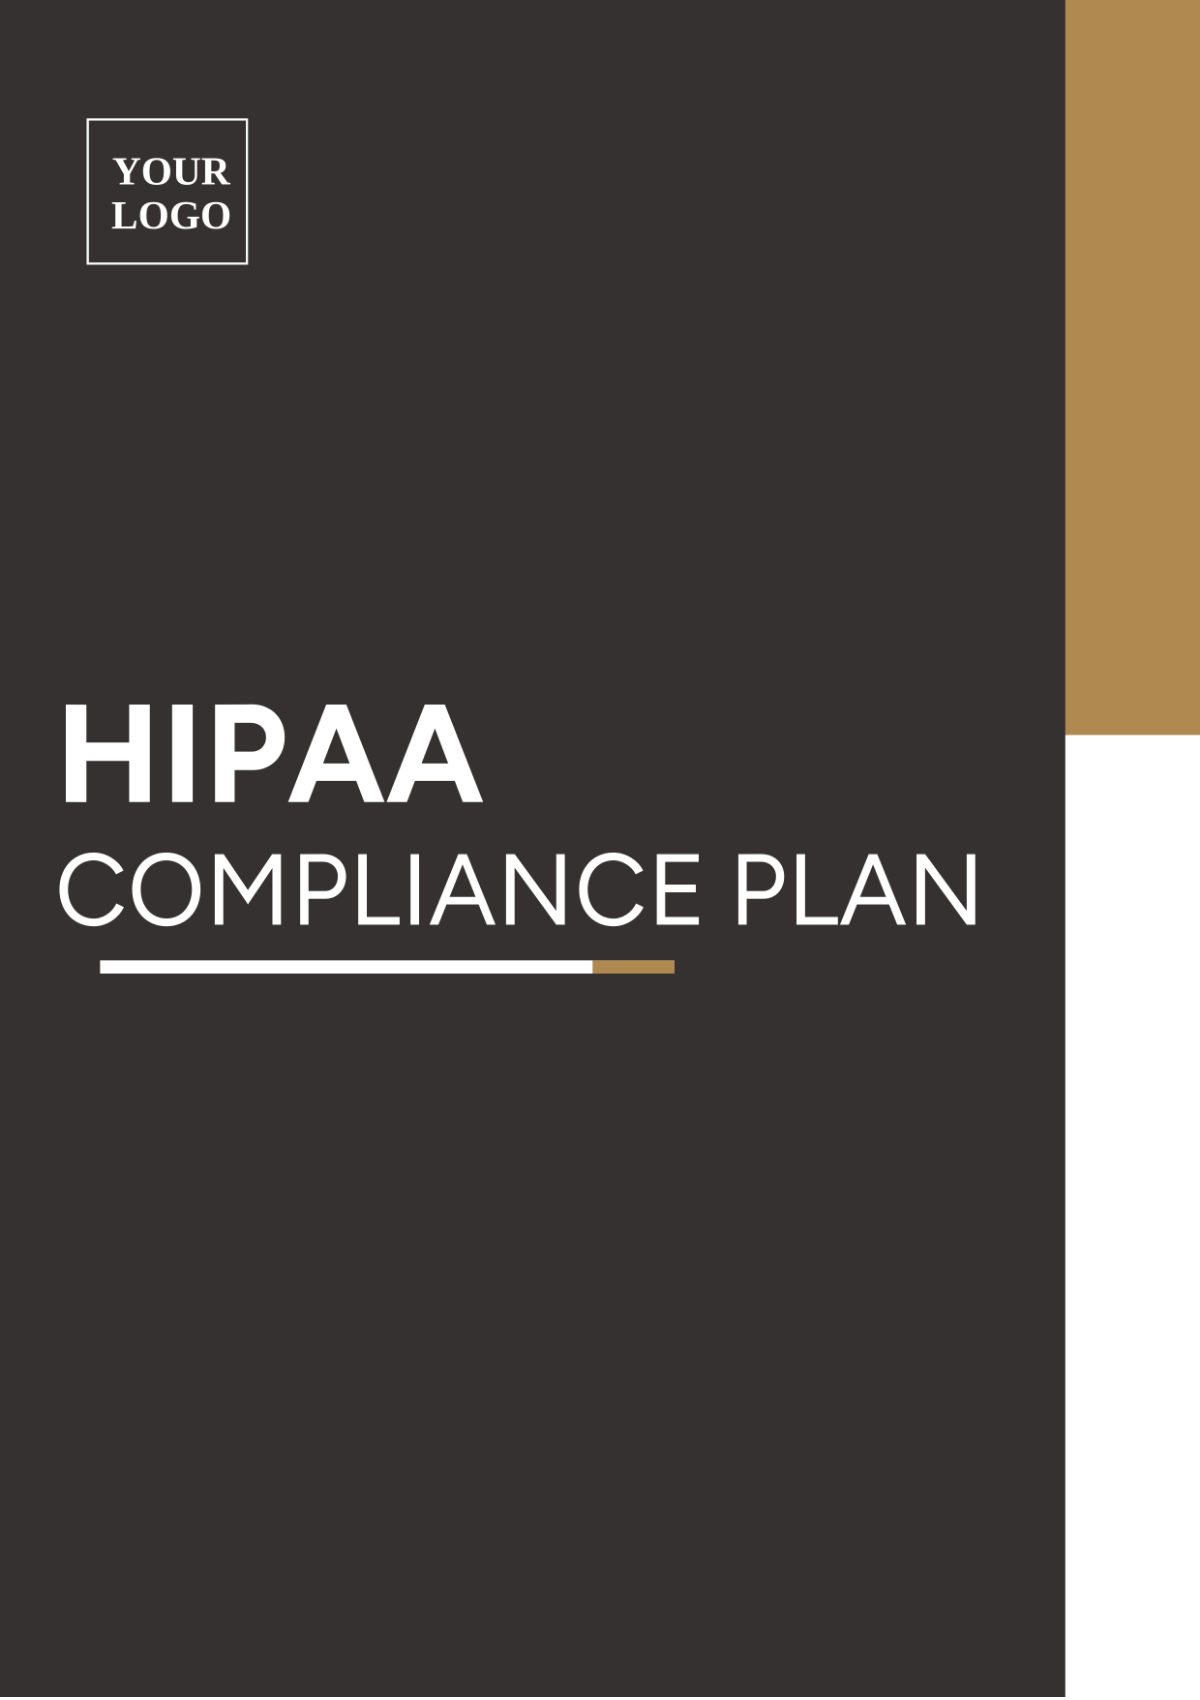 Free HIPAA Compliance Plan Template